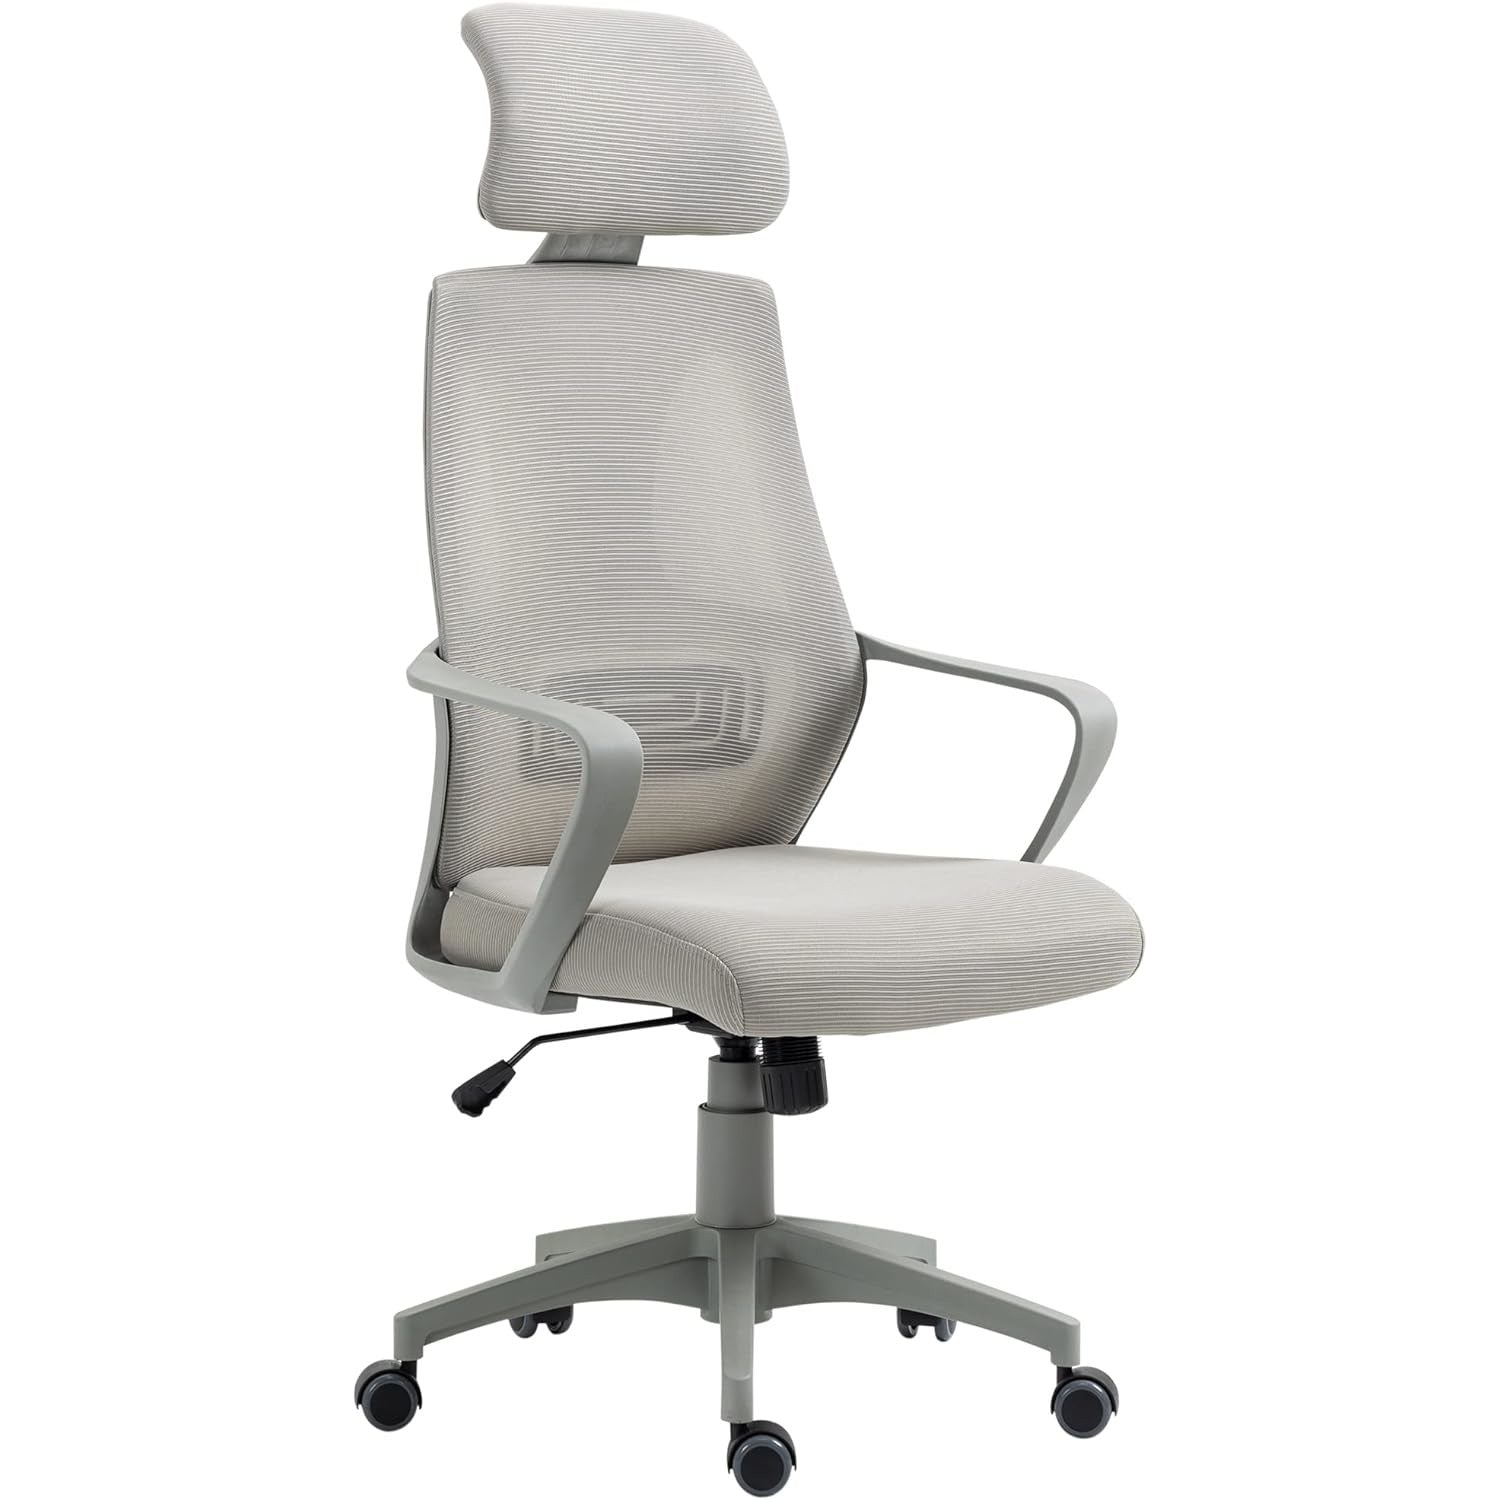 ProperAV Extra Mesh Ergonomic Adjustable Mesh Office Chair with Headrest & Lumbar Support (Grey)